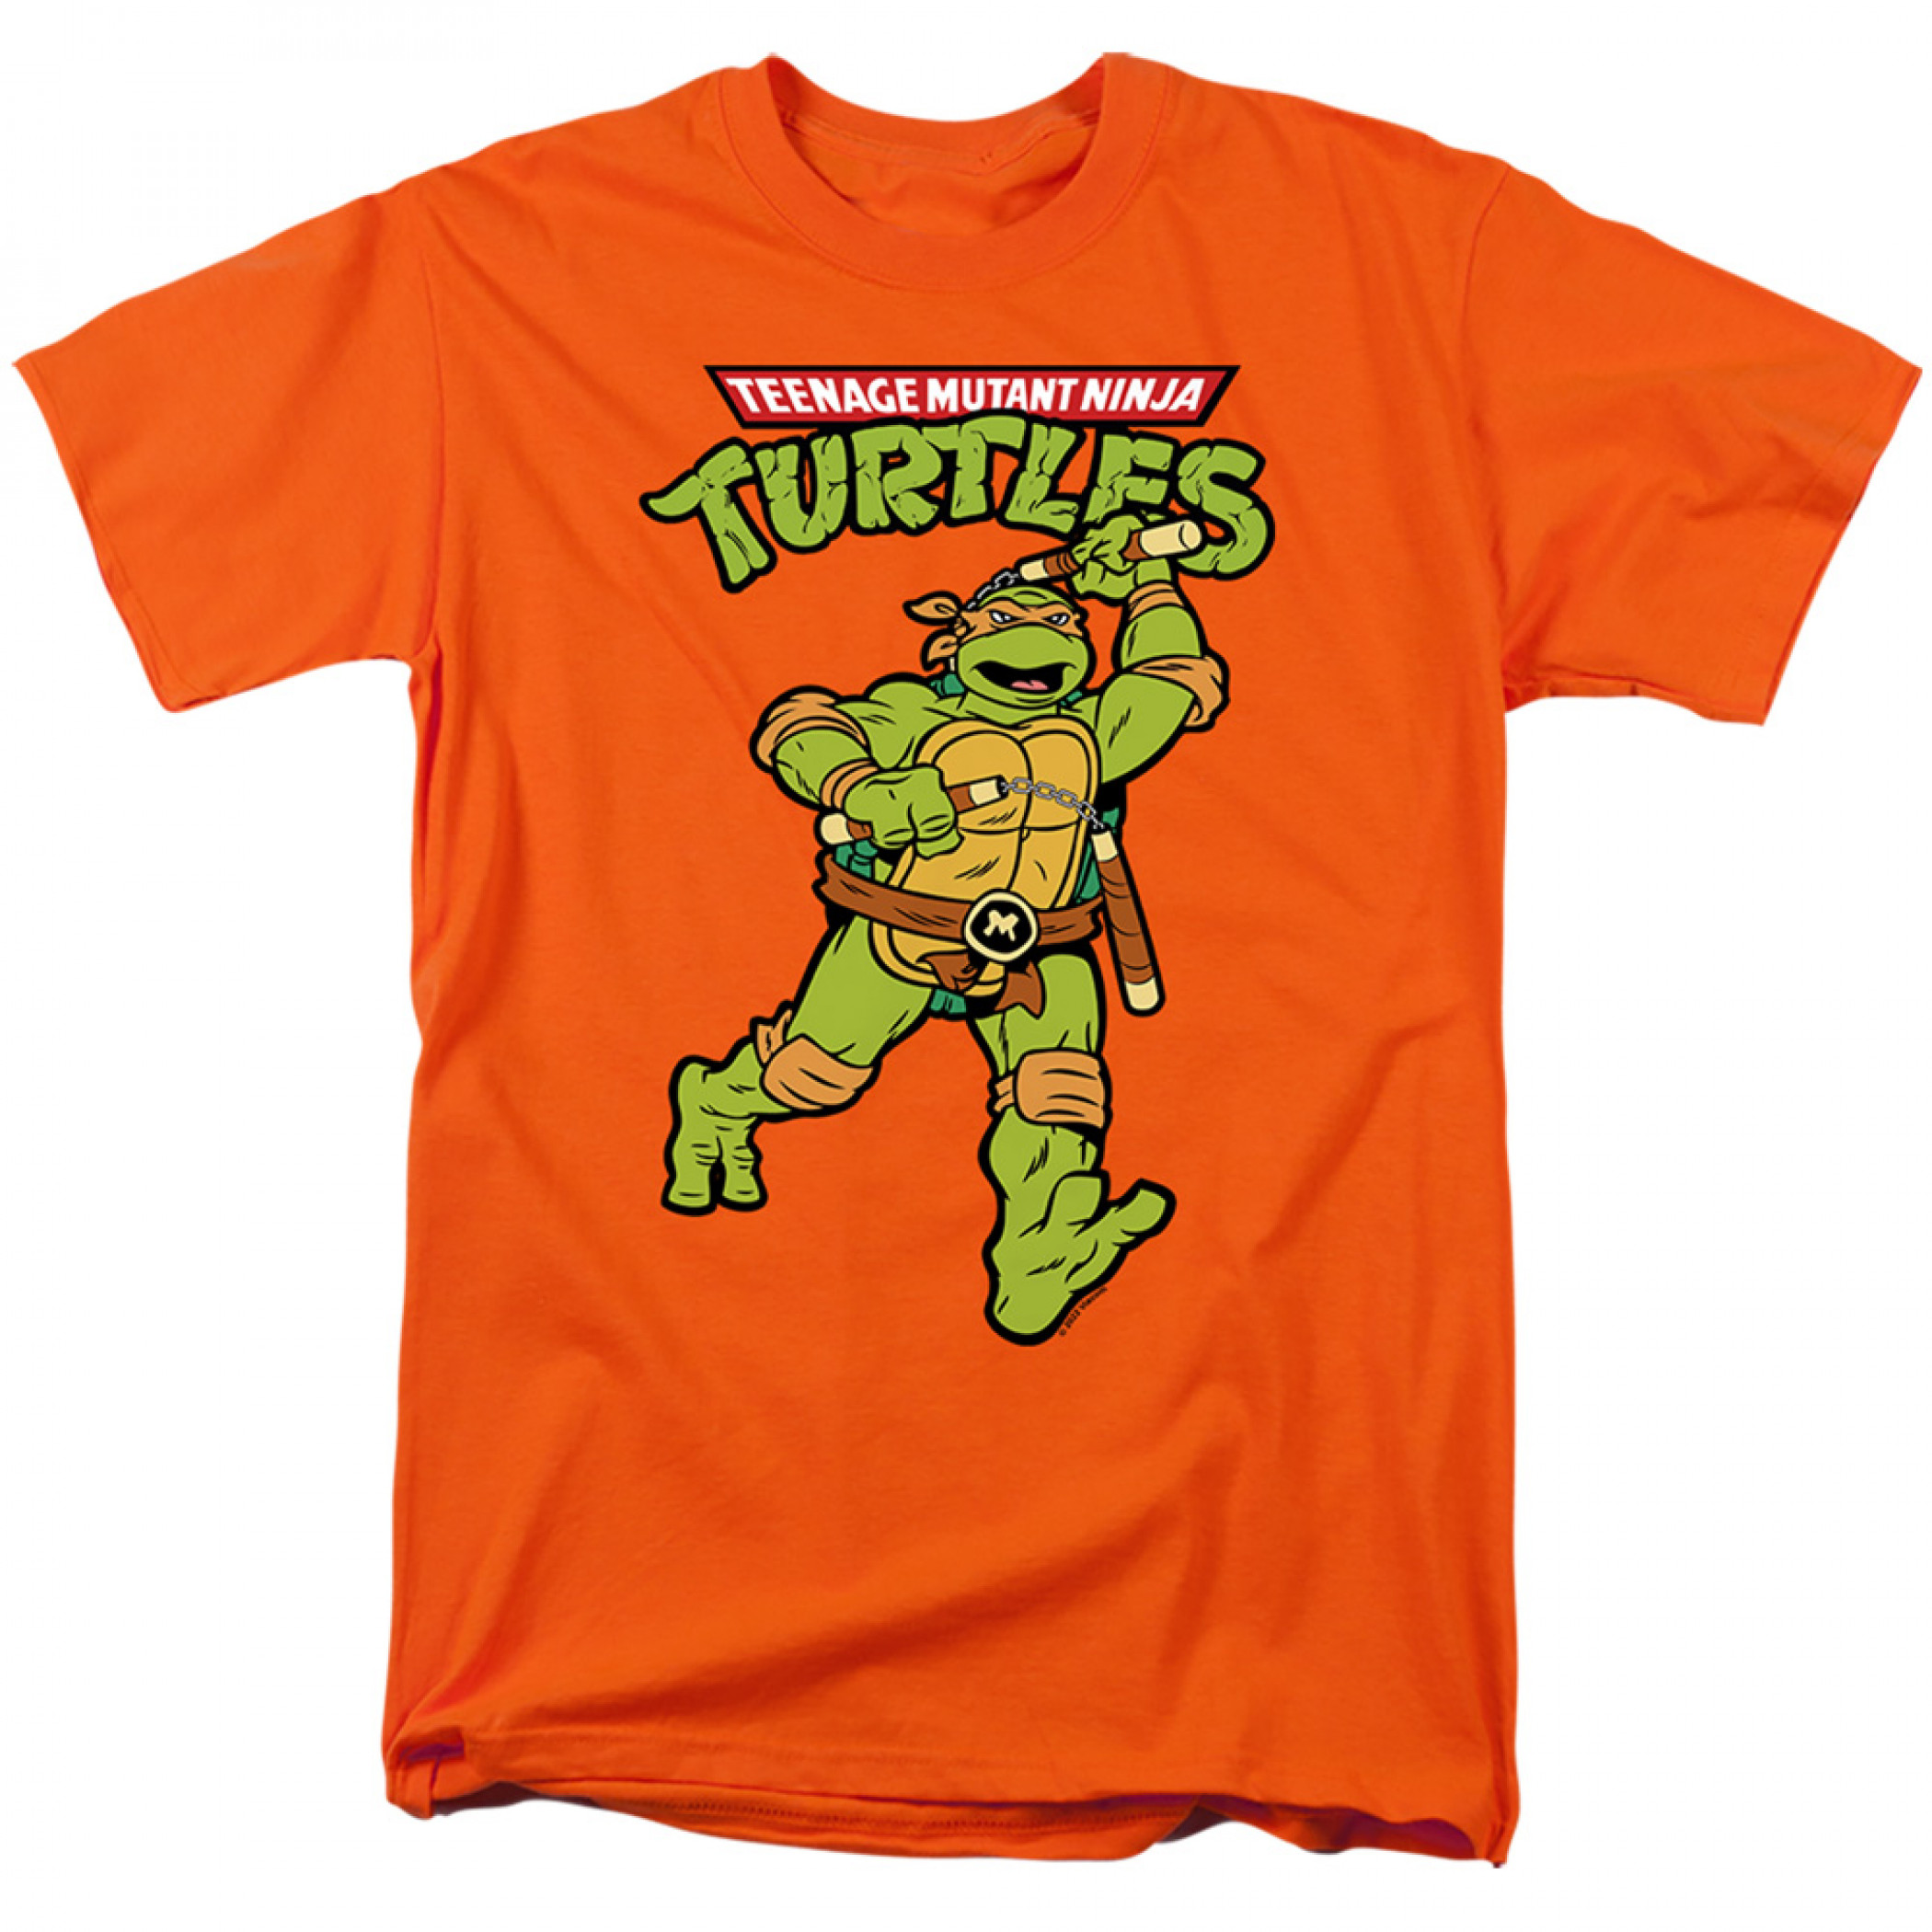 Teenage Mutant Ninja Turtles Retro Mikey T-Shirt